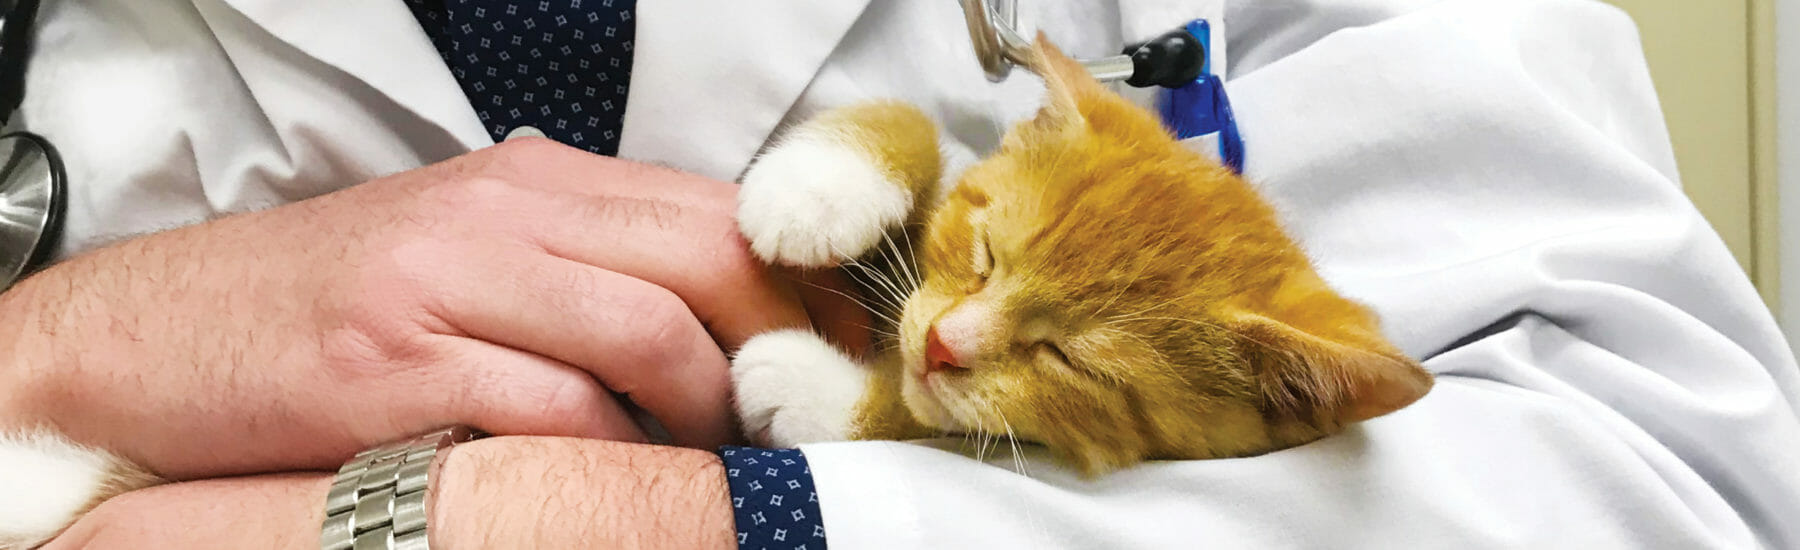 Veterinary employee holding orange cat